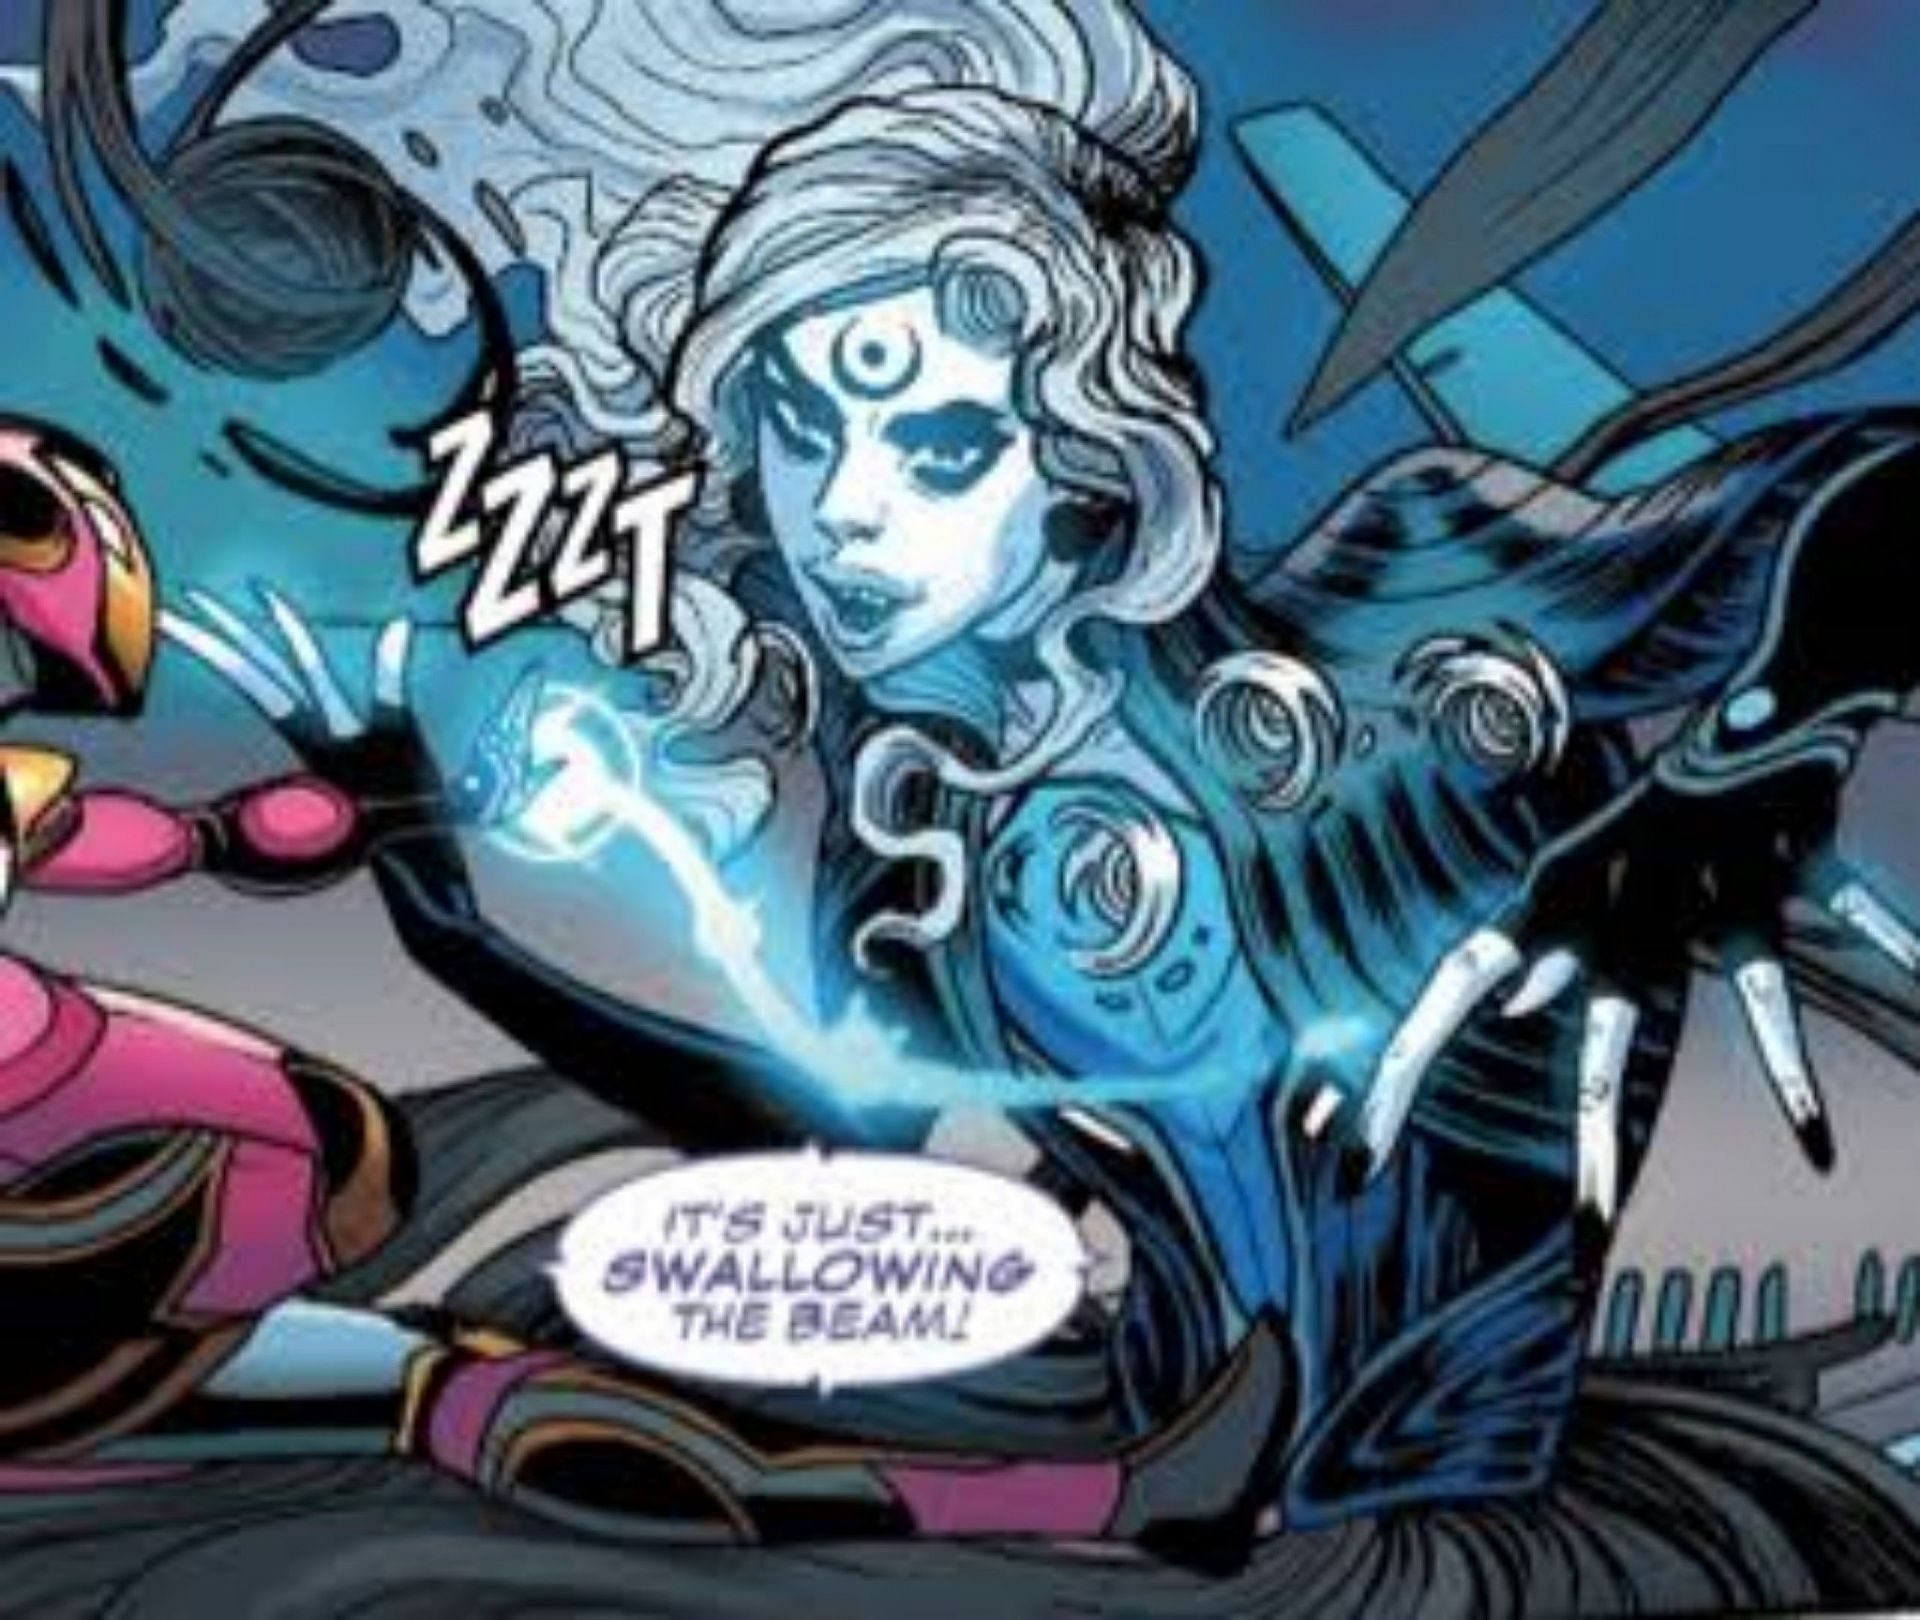 Eclipse in the Ironheart comics (Image via Marvel Comics)